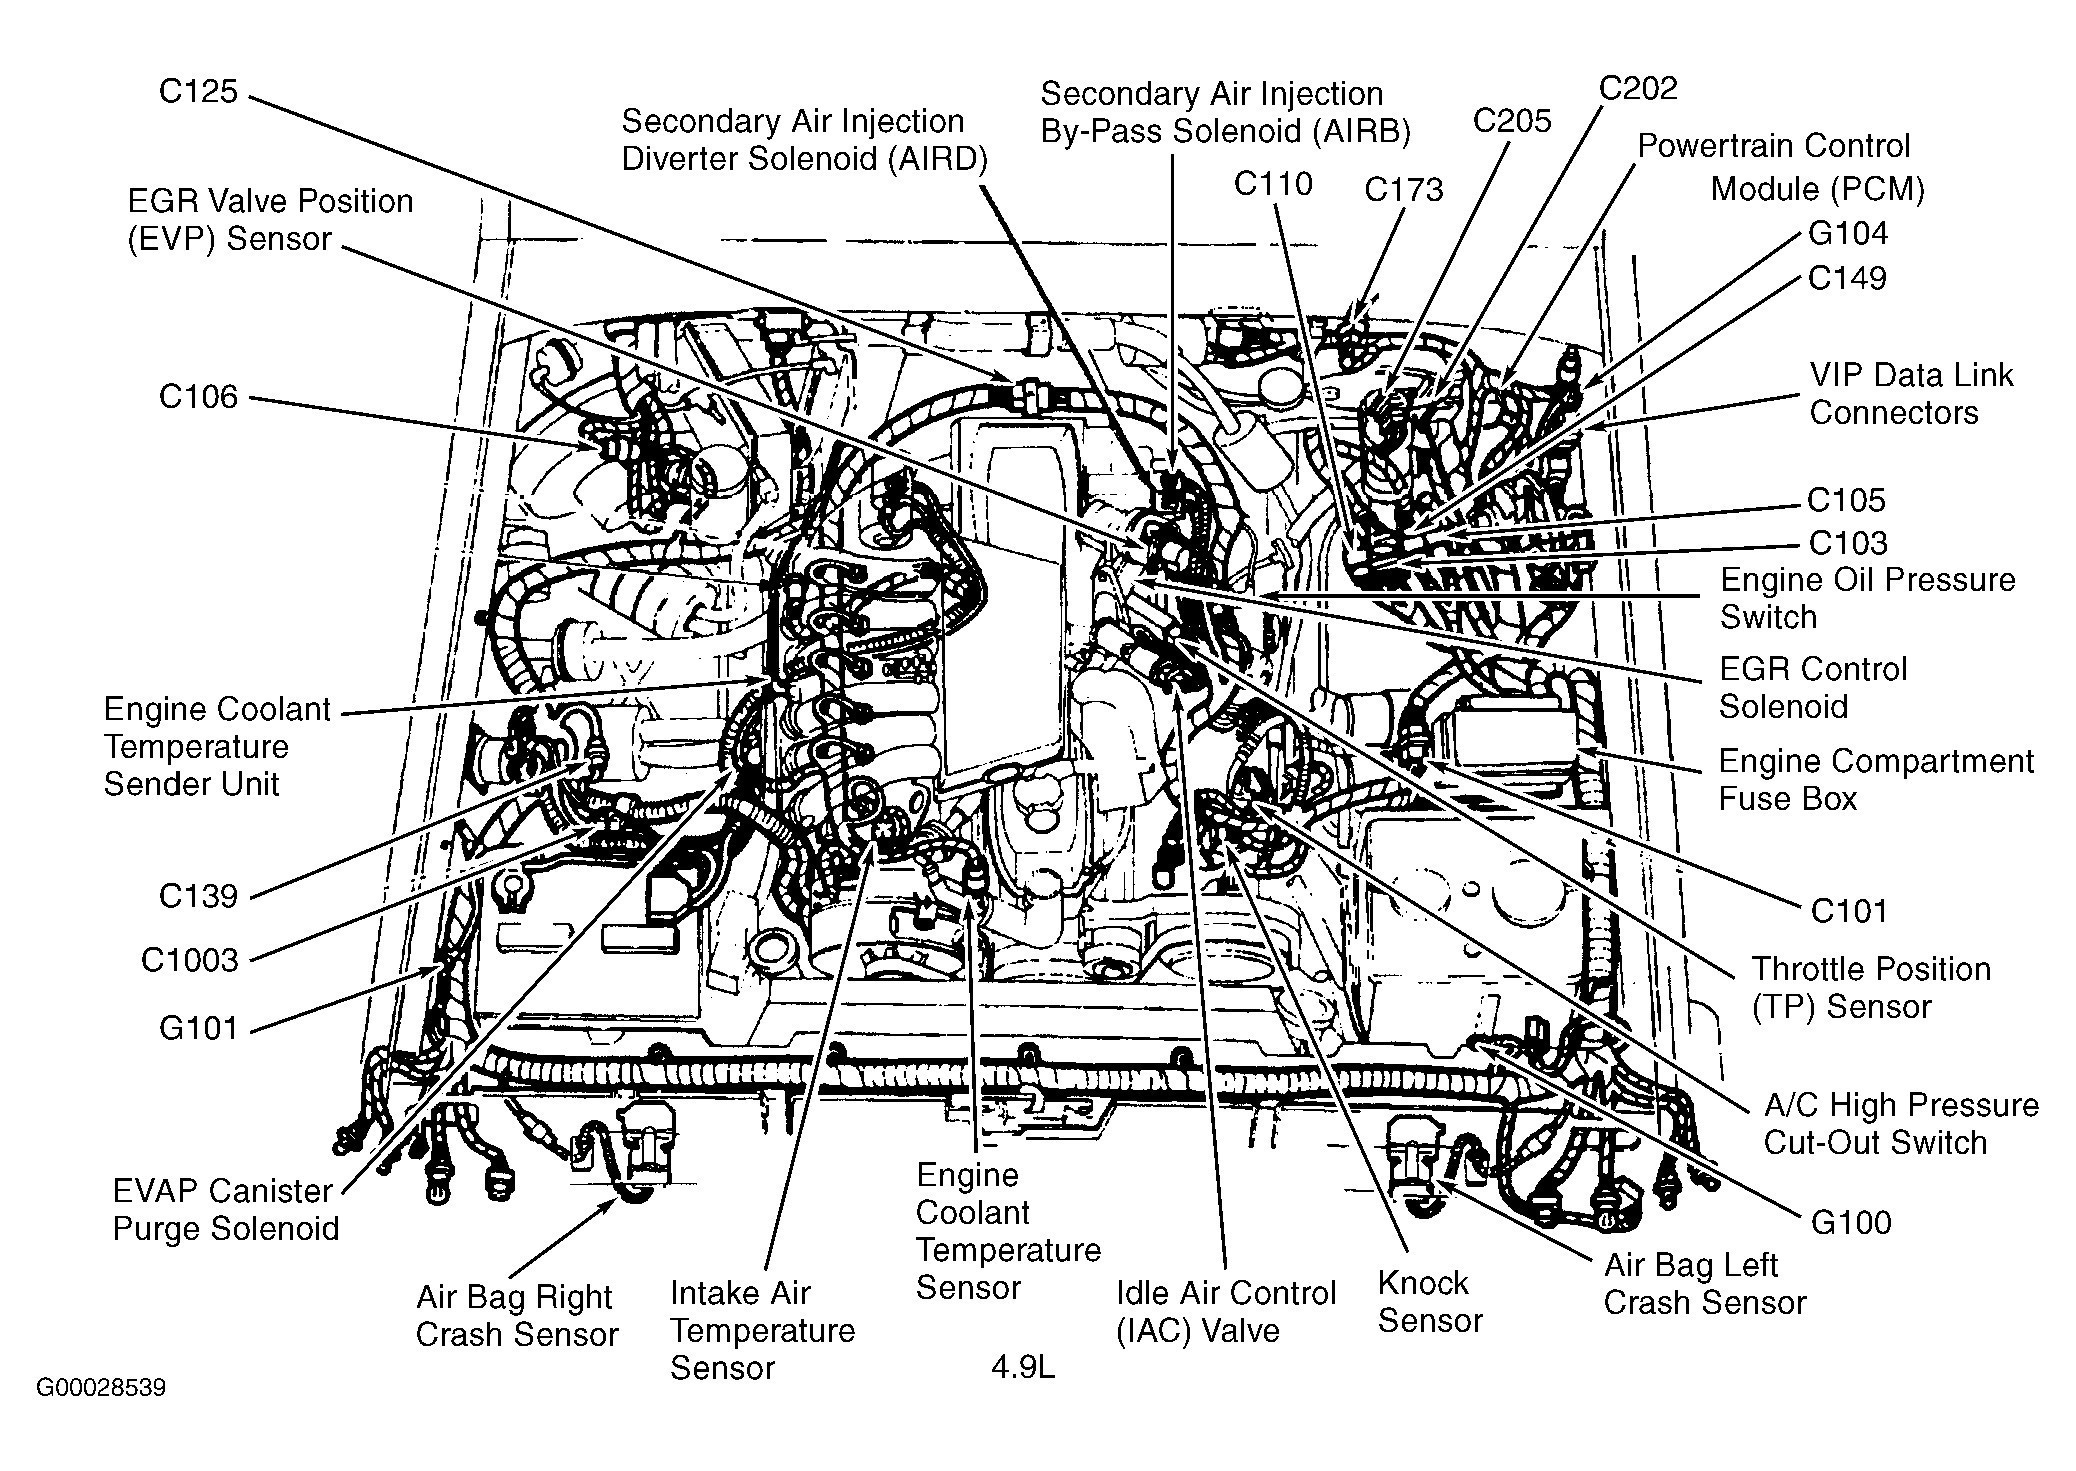 91 F150 4.9l Engine Drawings ford F150 4 9l Engine Diagram Wiring Diagram Of 91 F150 4.9l Engine Drawings